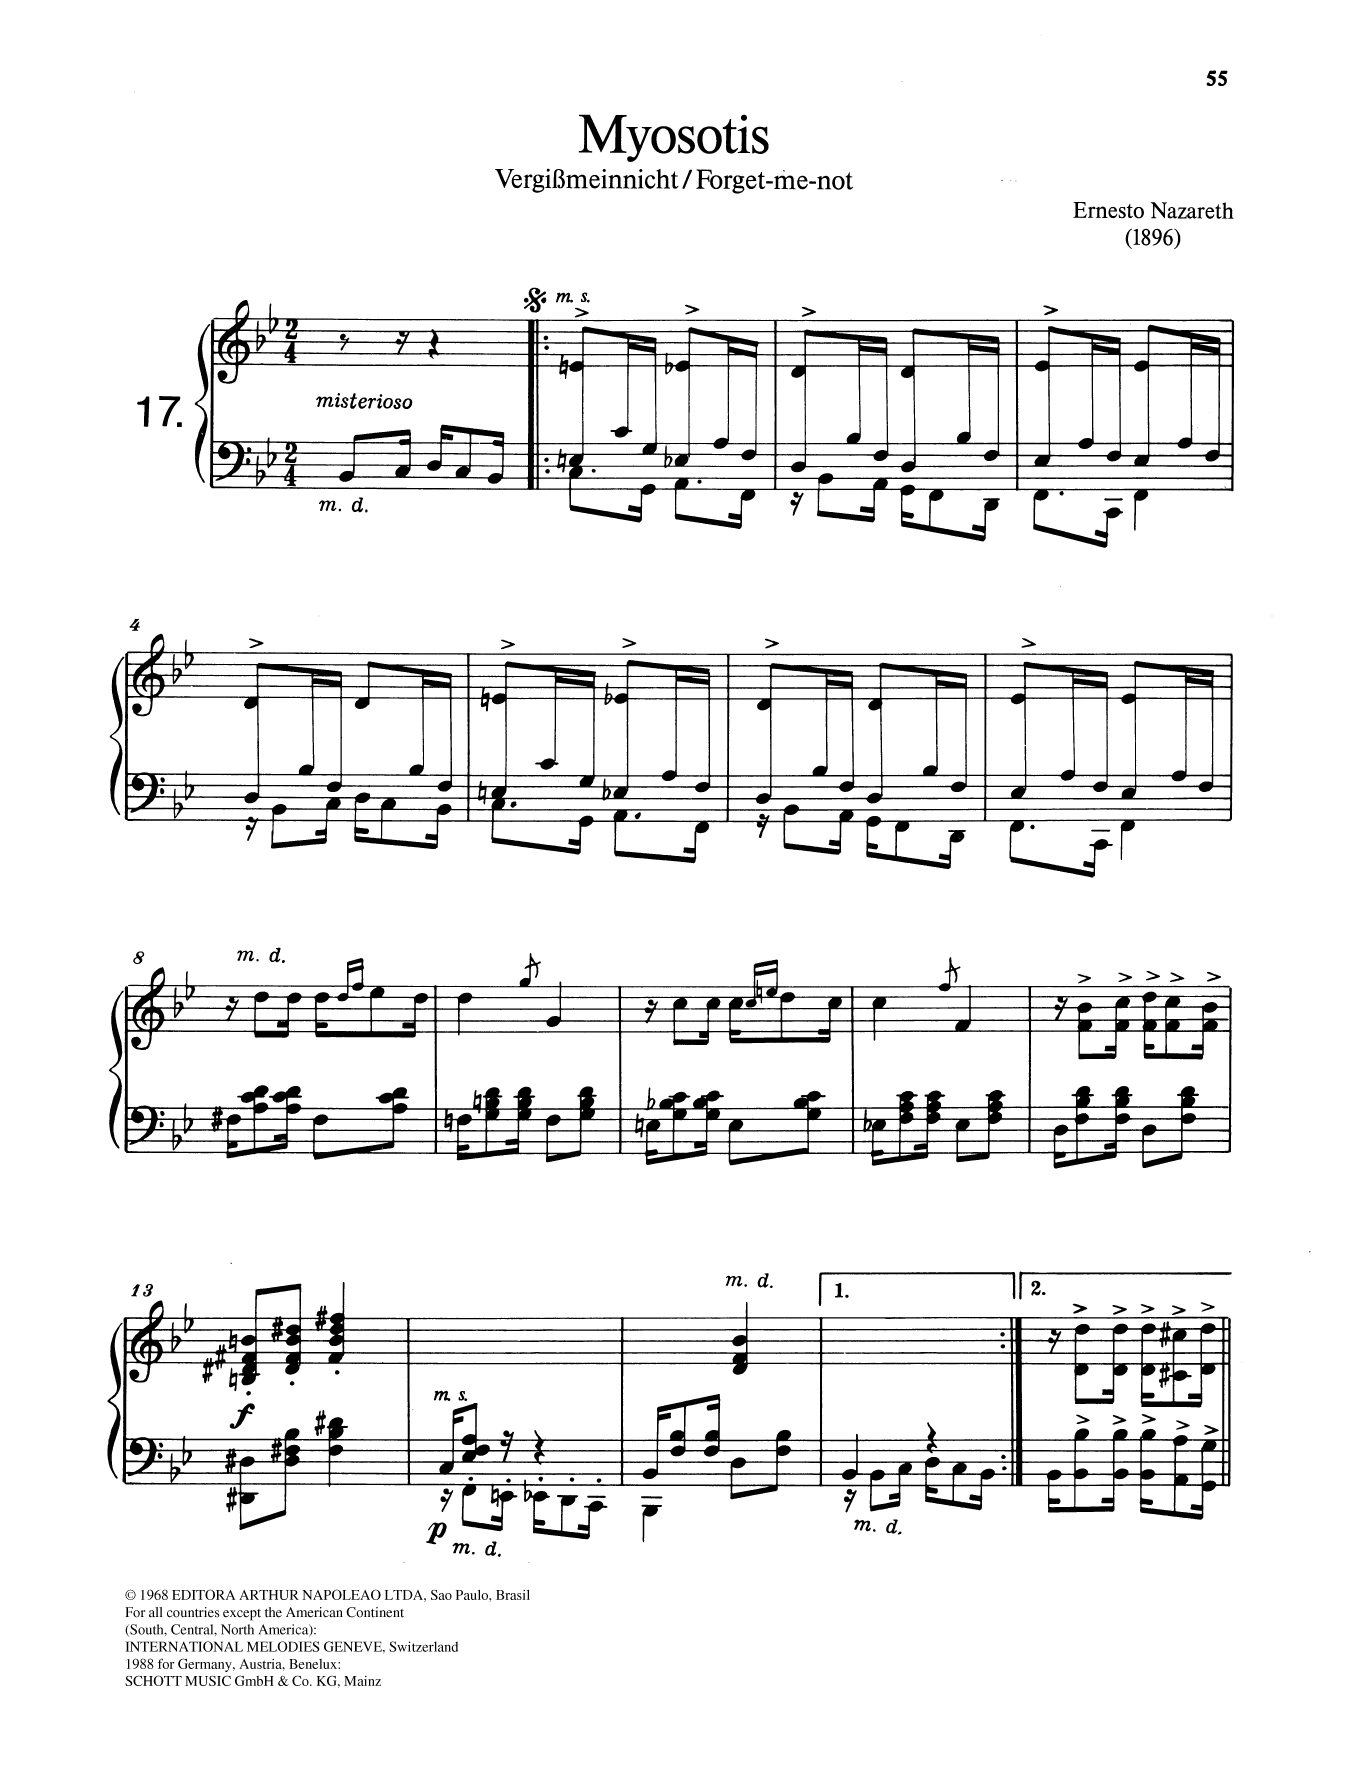 Ernesto Nazareth Myosotis Sheet Music Notes & Chords for Piano Solo - Download or Print PDF